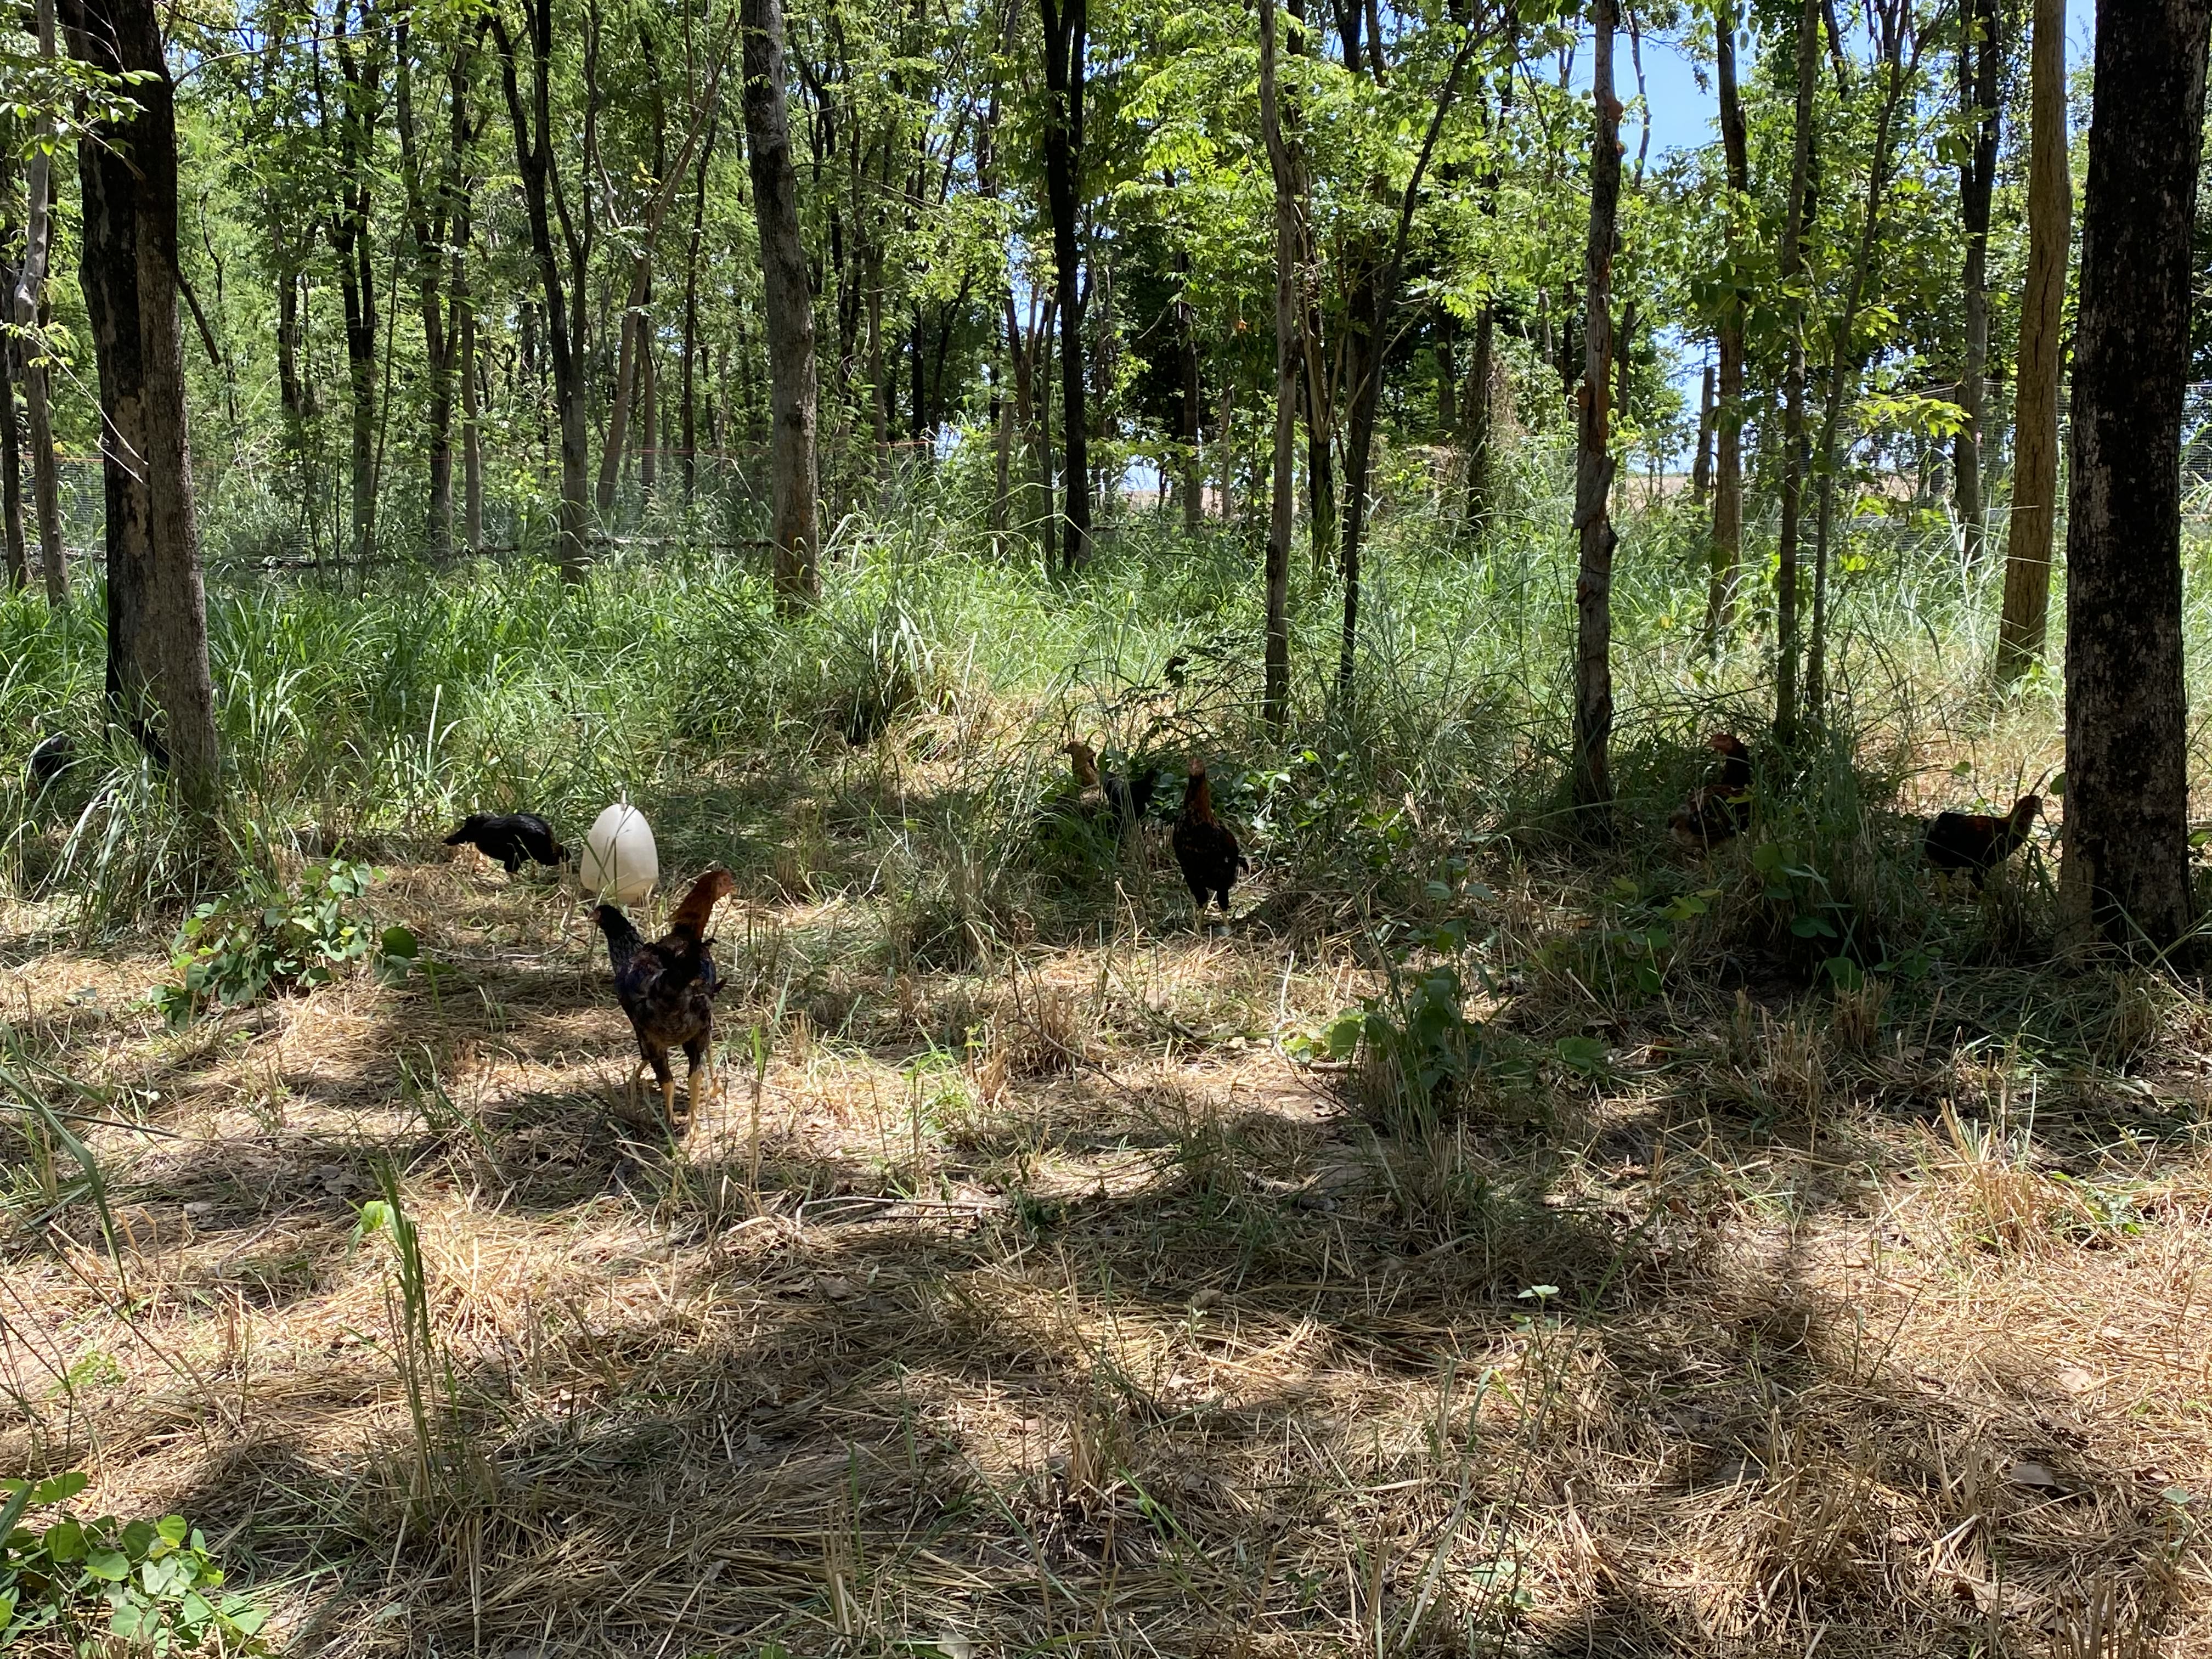 Pasture-raised Chicken Wings